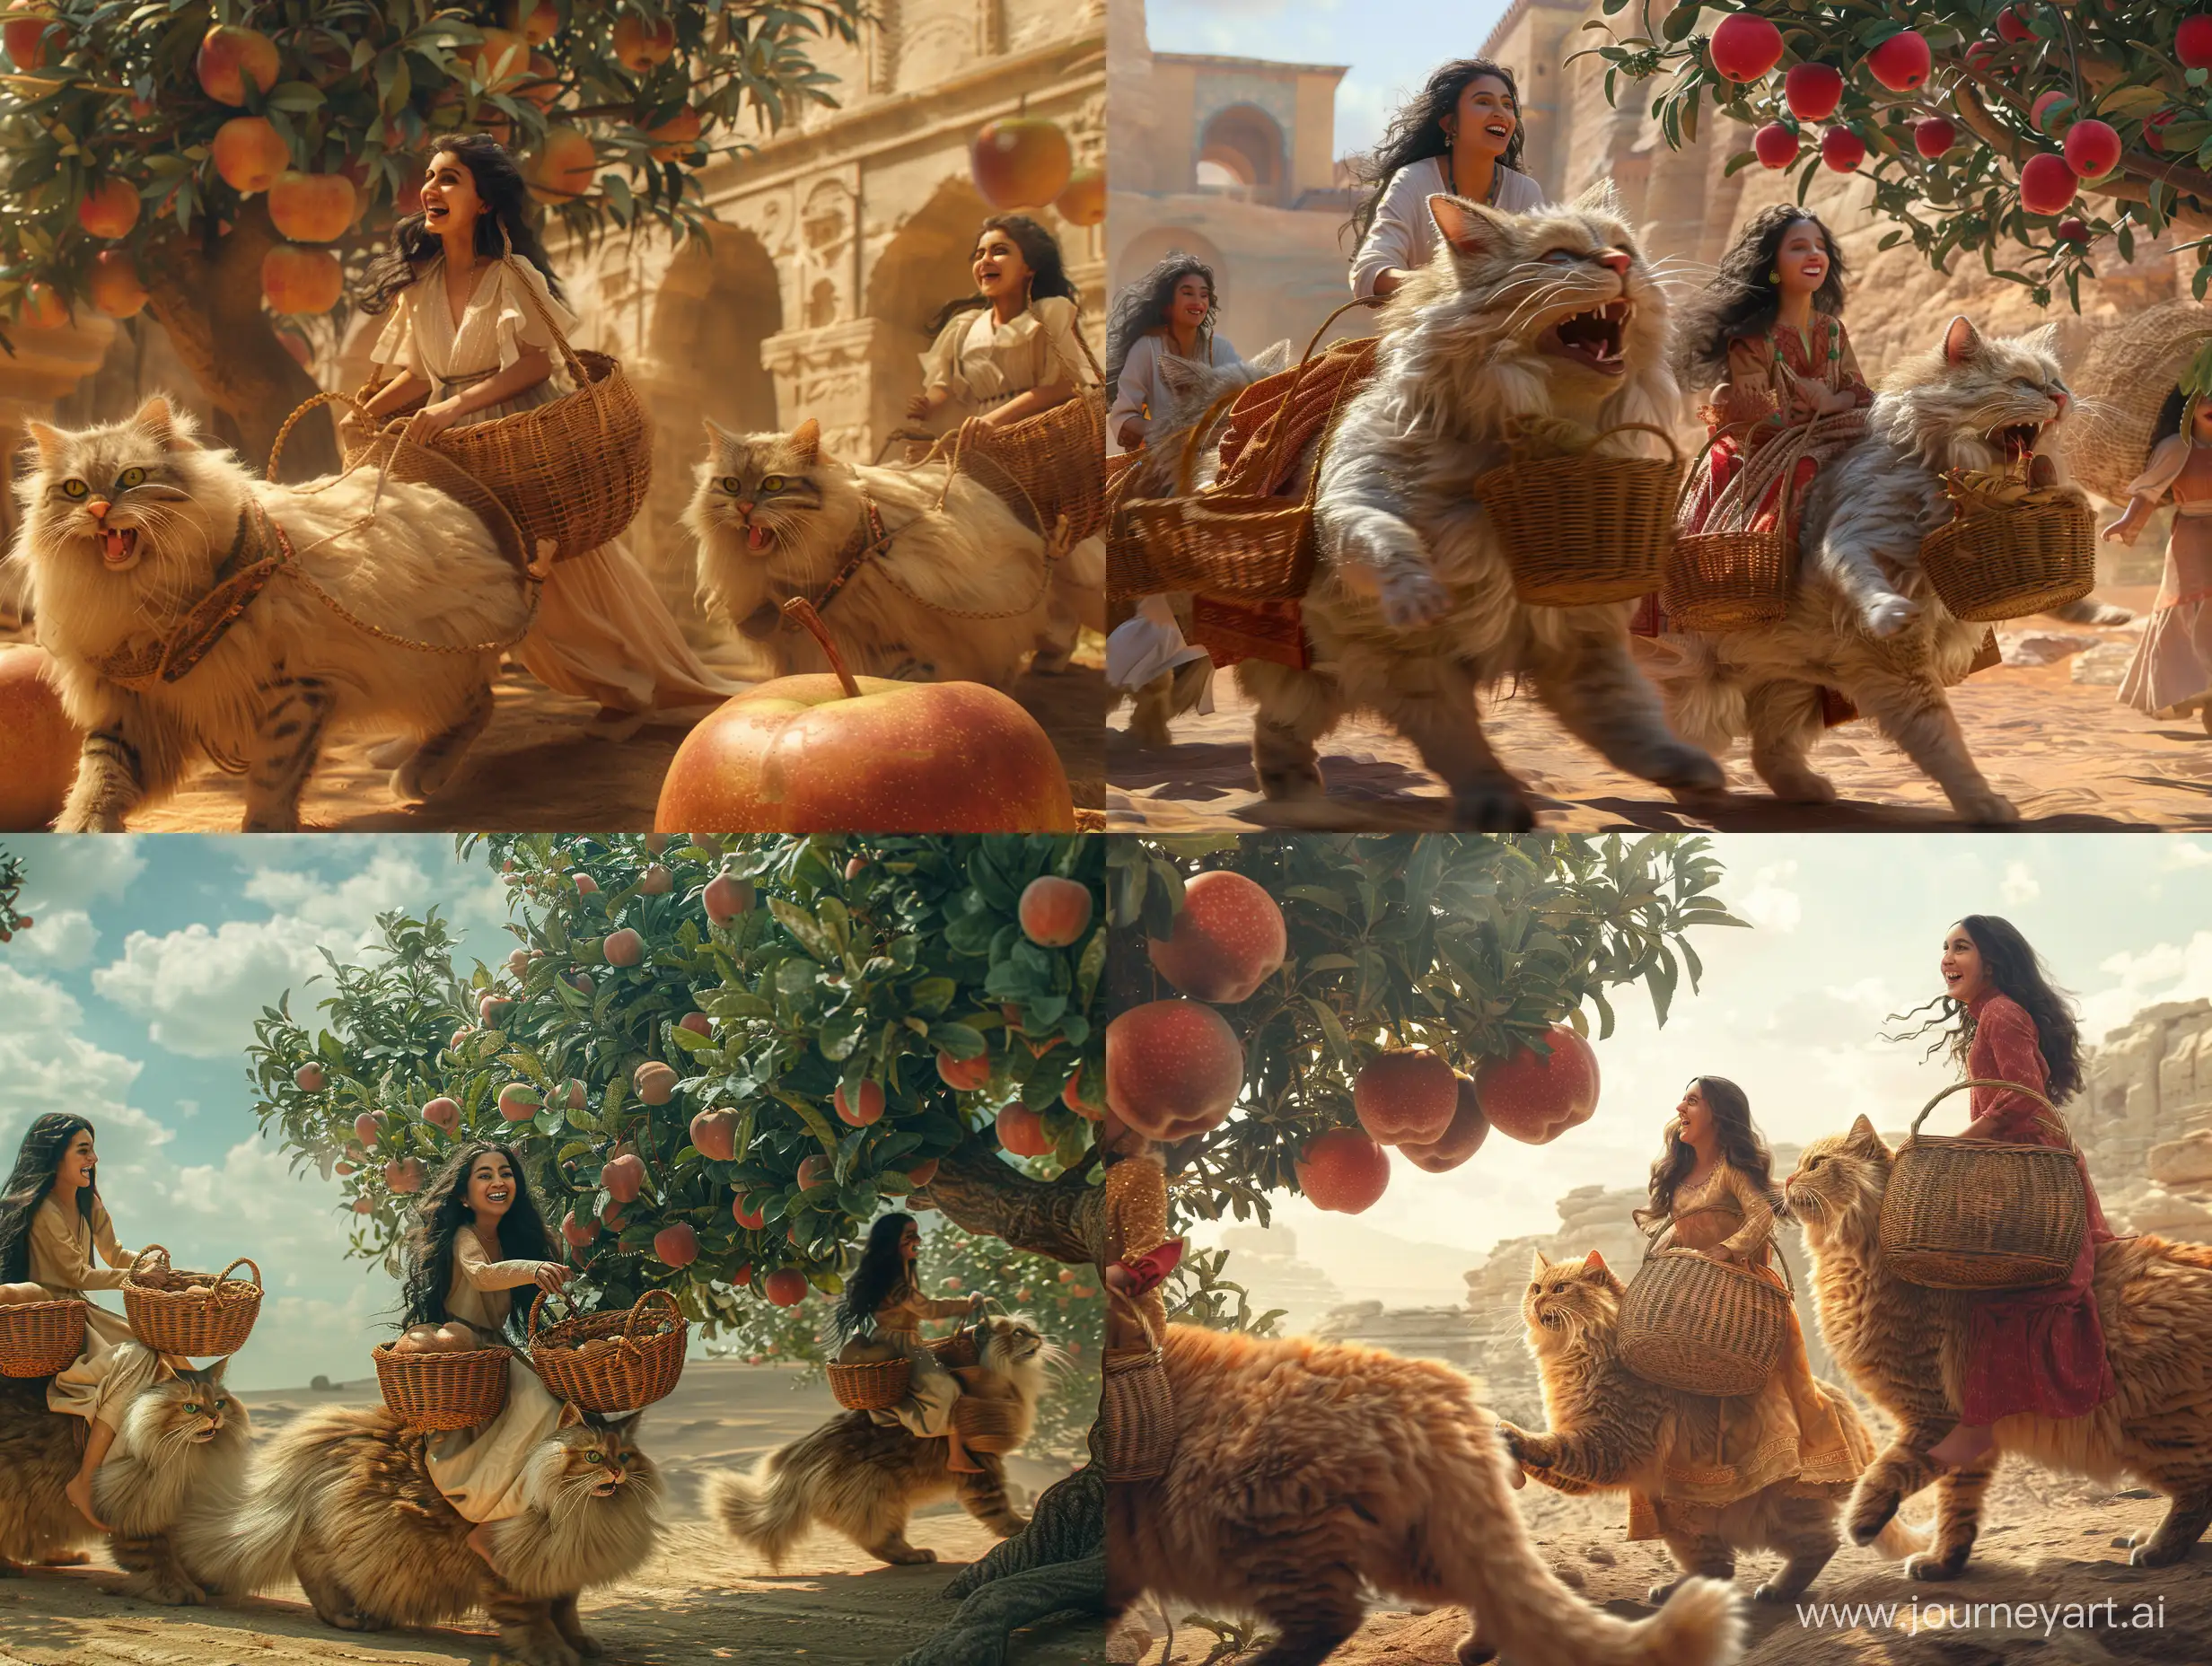 Joyful-Persian-Women-Riding-Giant-Cats-Towards-Enormous-Apple-Tree-in-Ancient-Desert